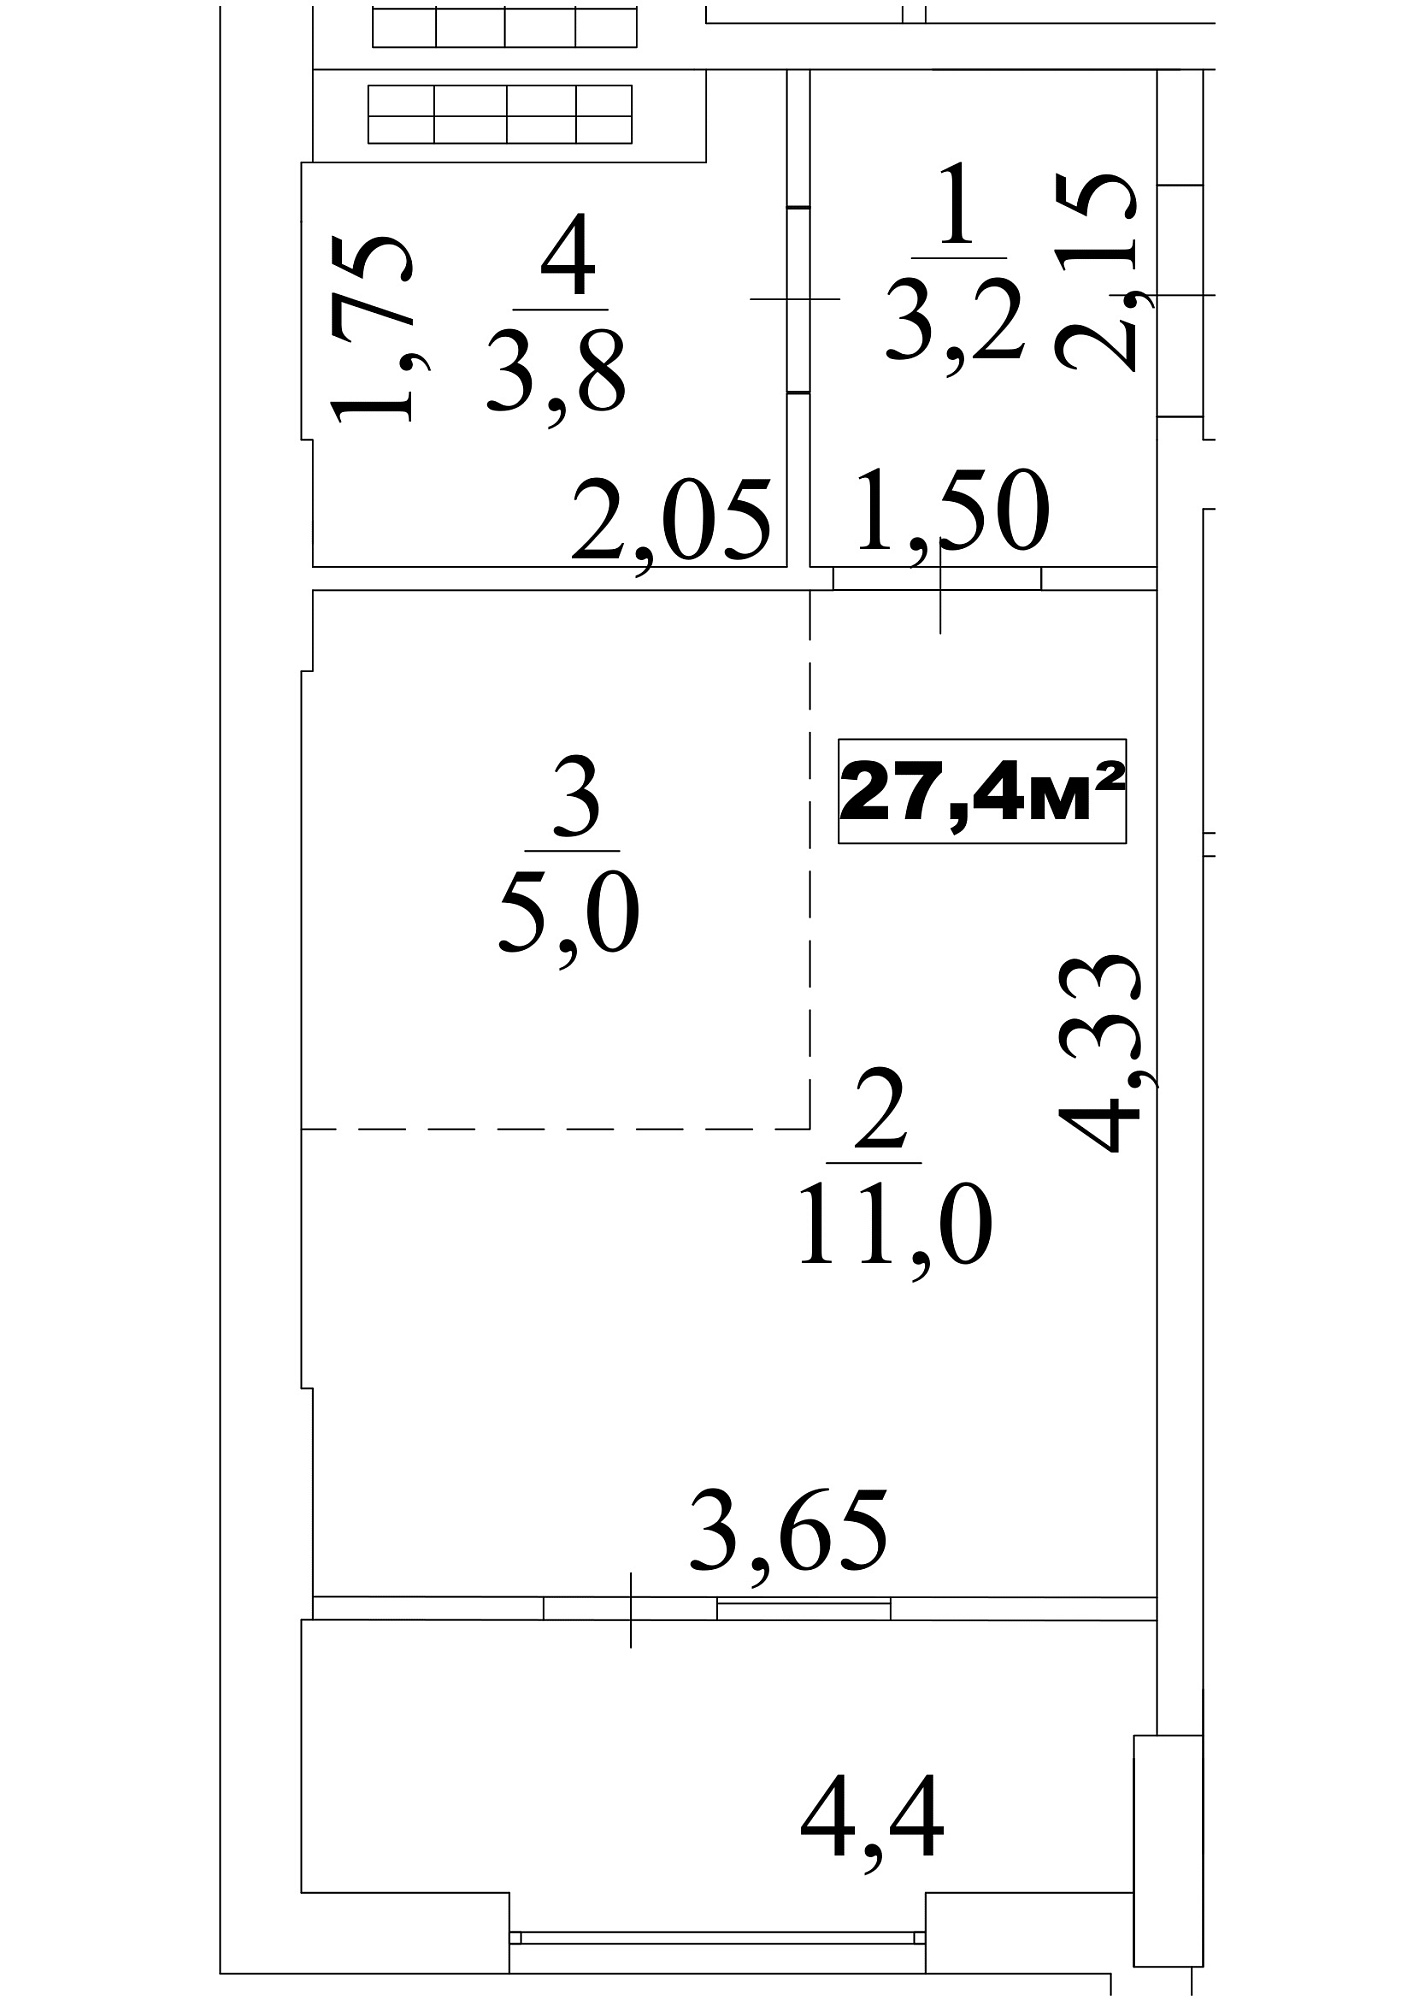 Planning Smart flats area 27.4m2, AB-10-08/0066а.